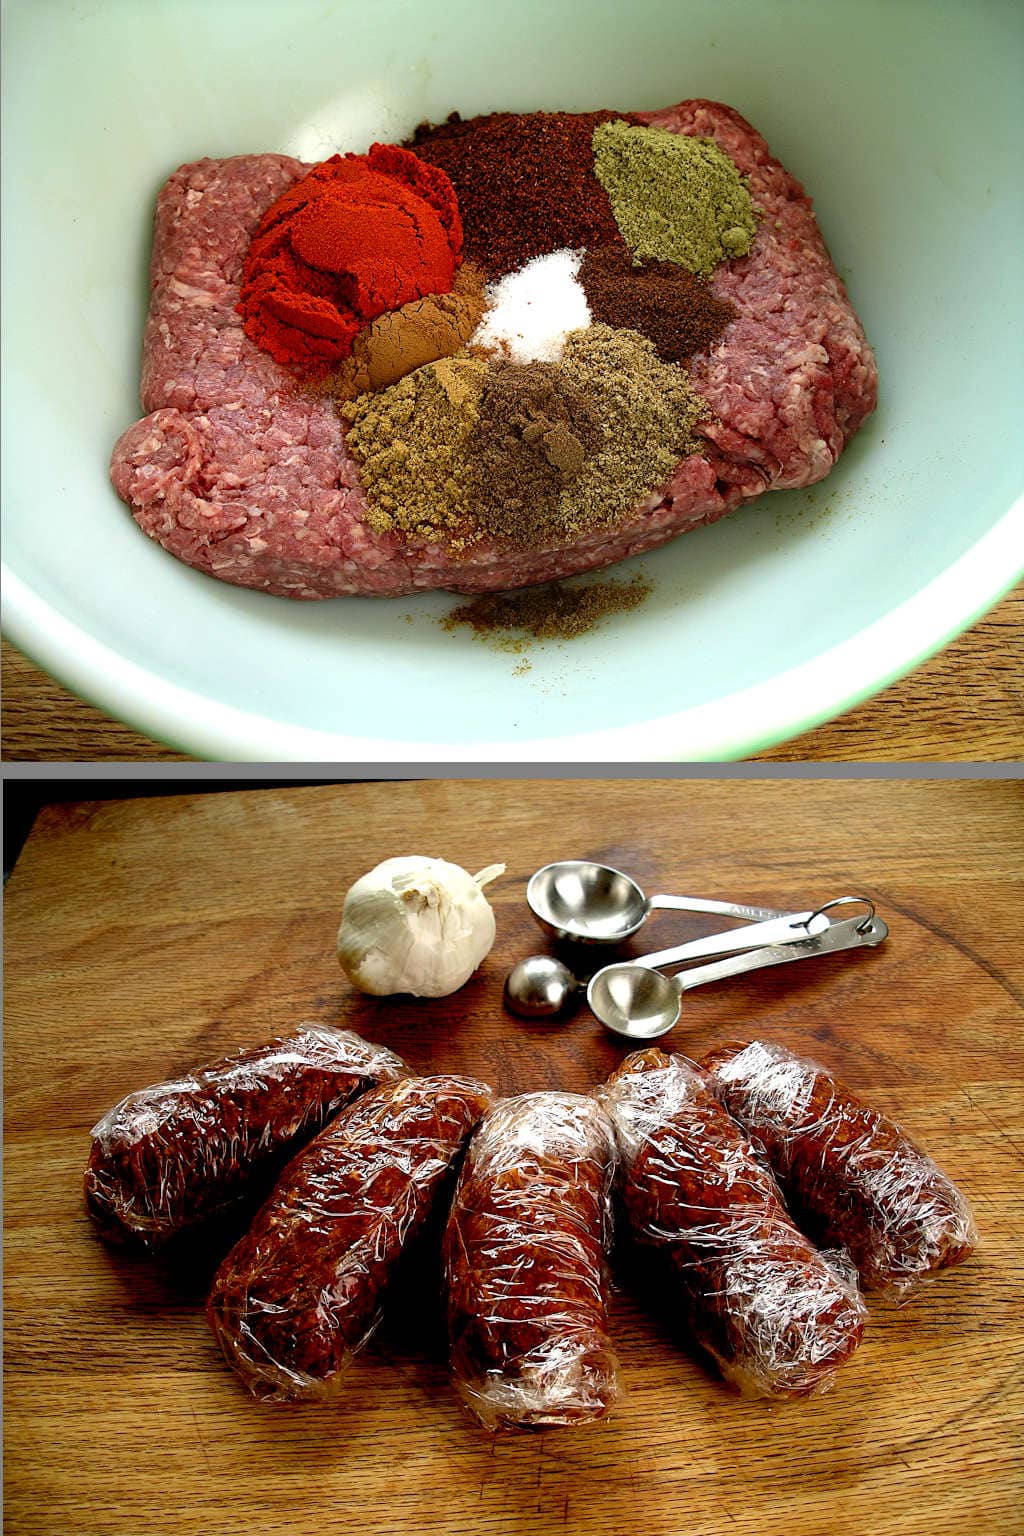 Ingredients for chorizo, top, and finished chorizo, bottom